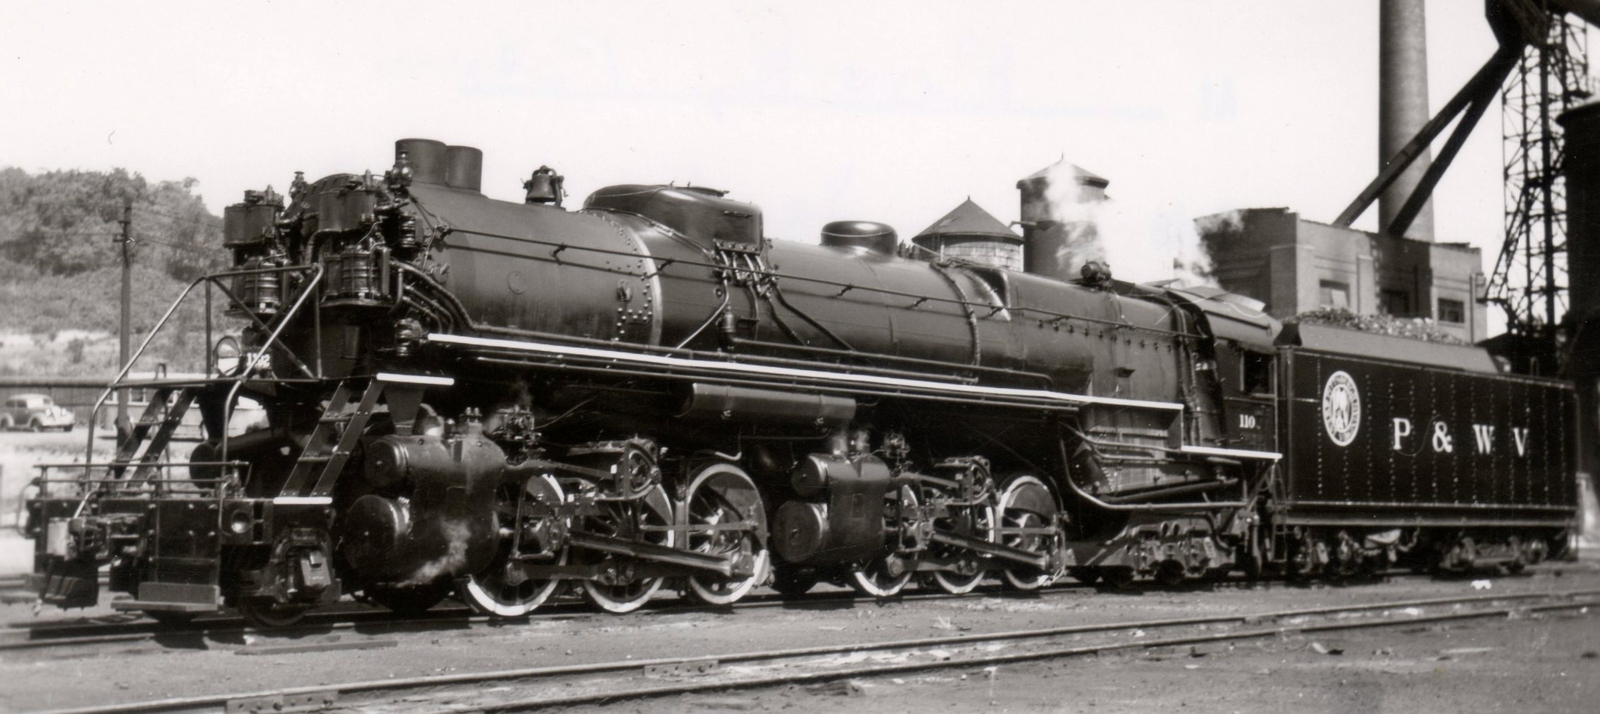 No. 1102 in September 1940 at Rook, Pennsylvania